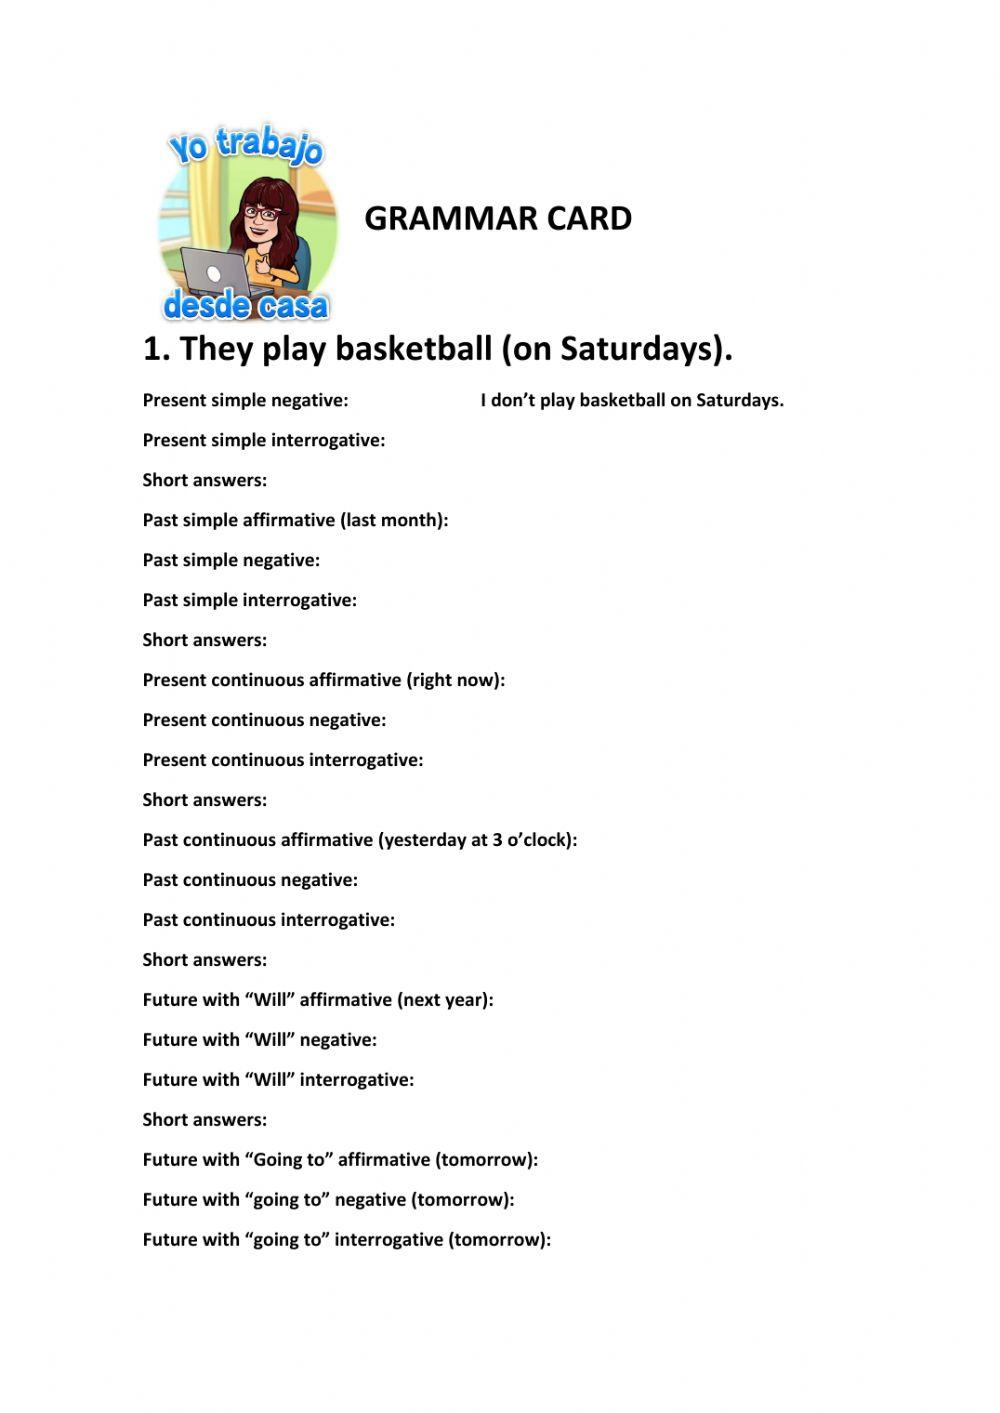 Grammar card